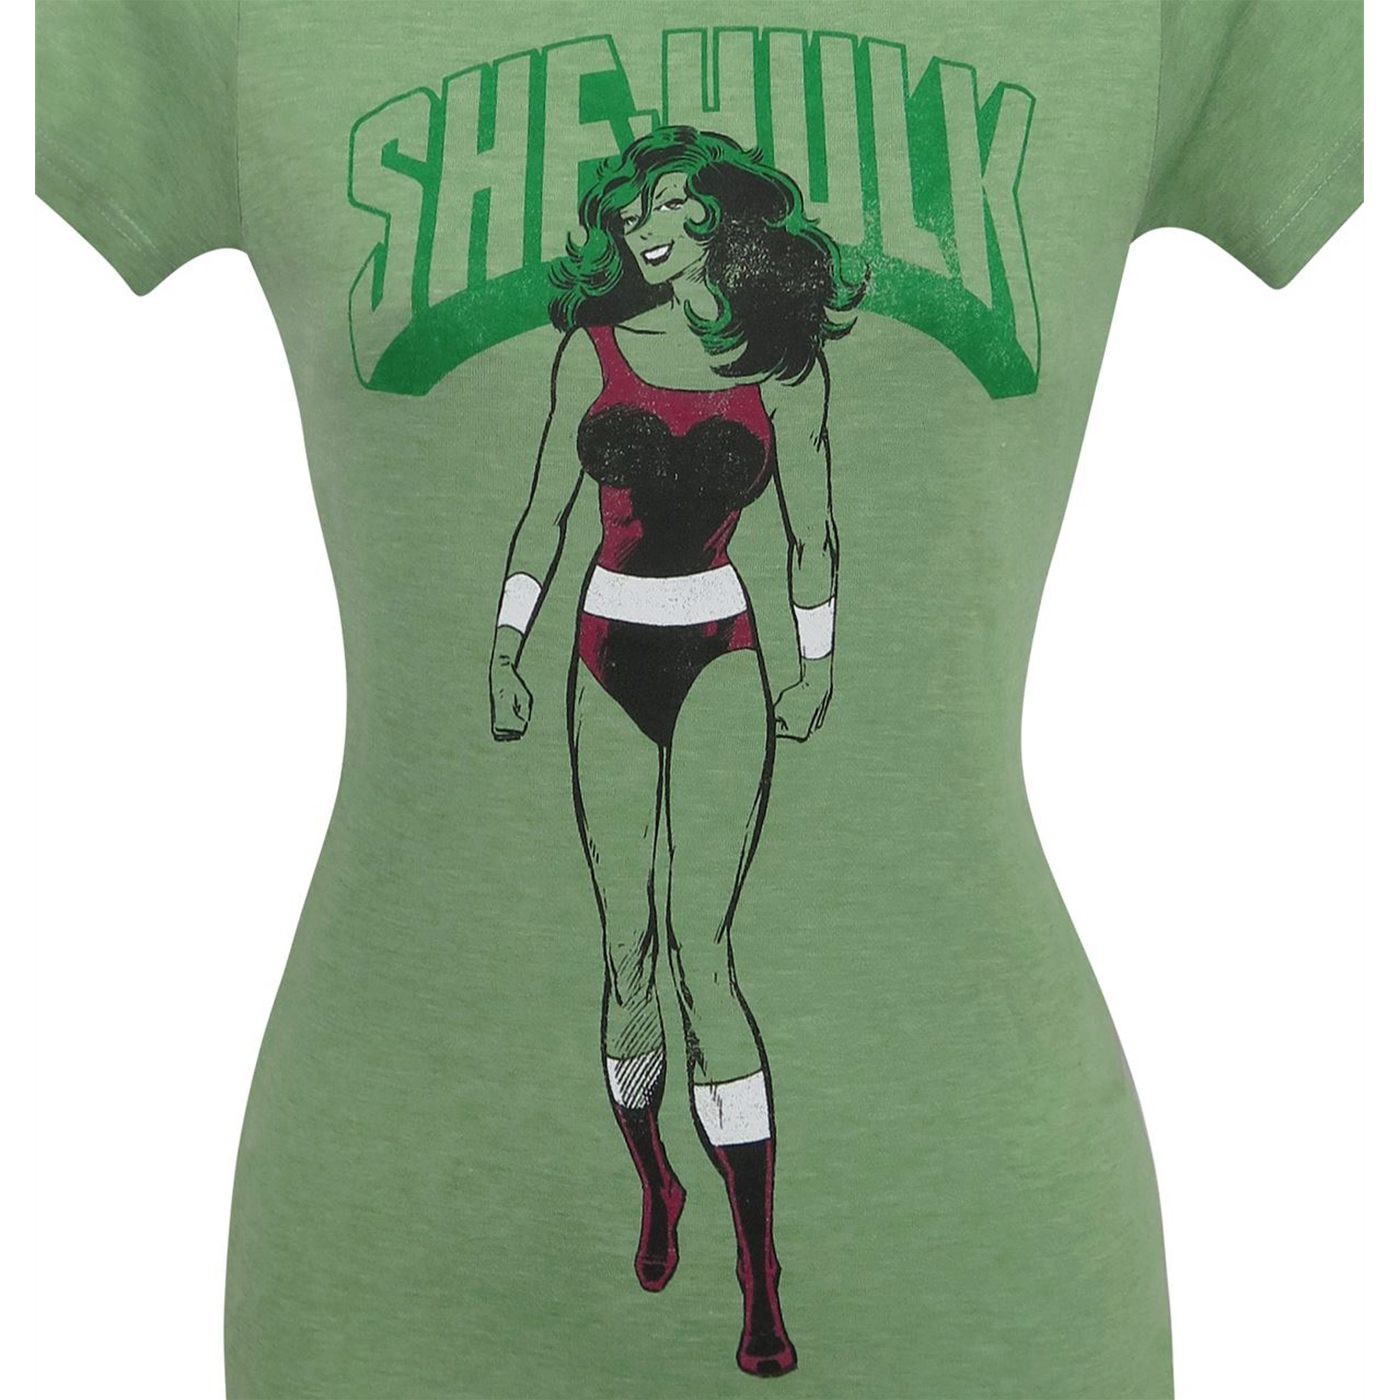 She-Hulk Tall Glass of Water Women's T-Shirt